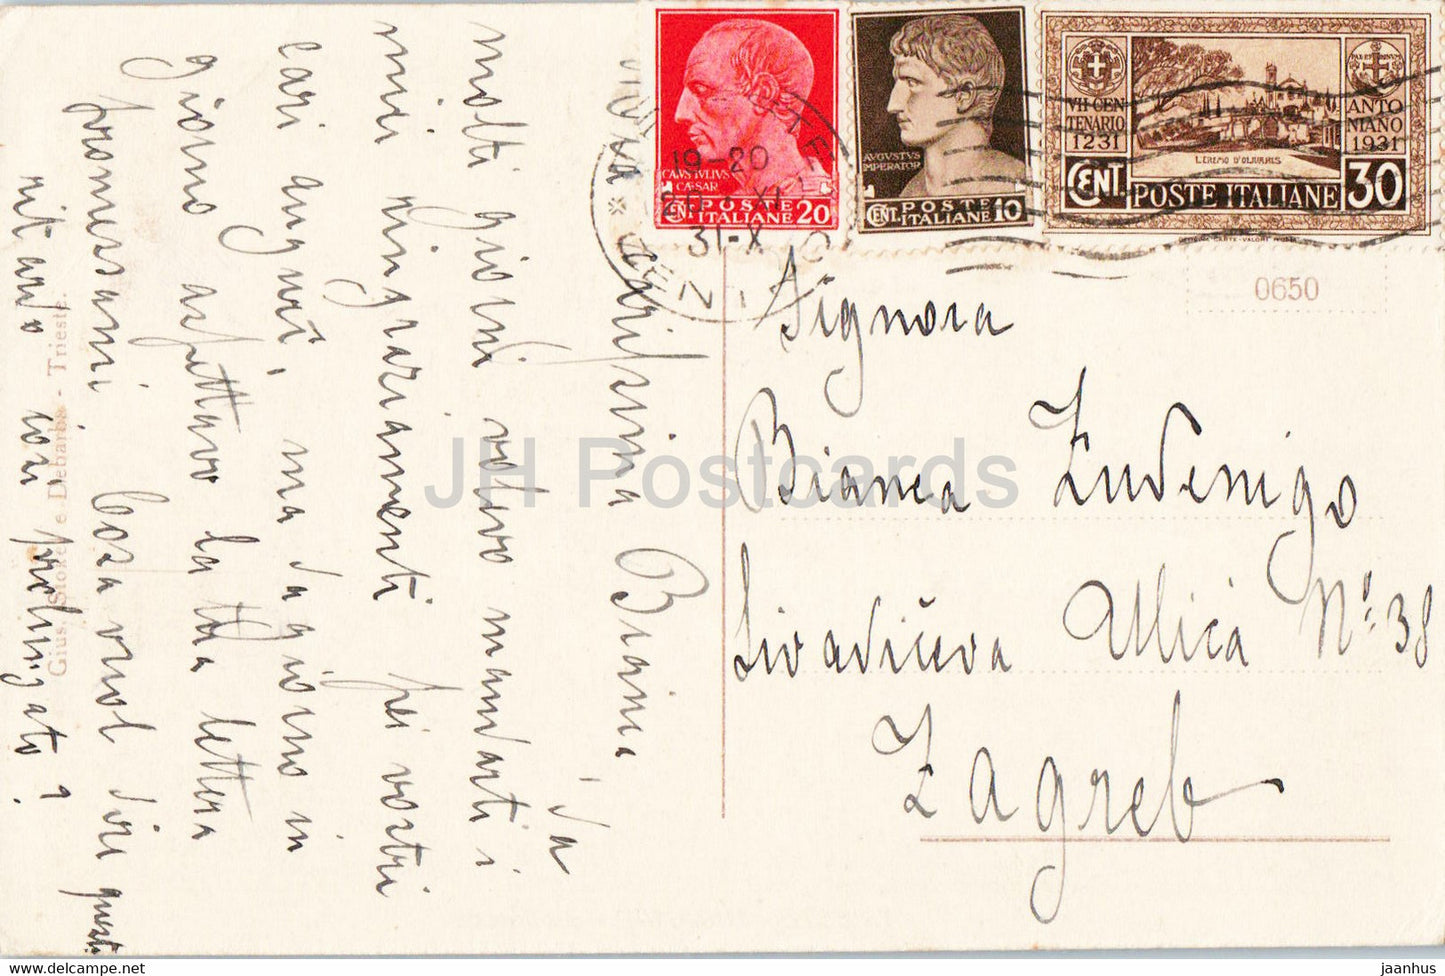 Trieste - Miramar - Biblioteca - library - old postcard - 1931 - Italy - used